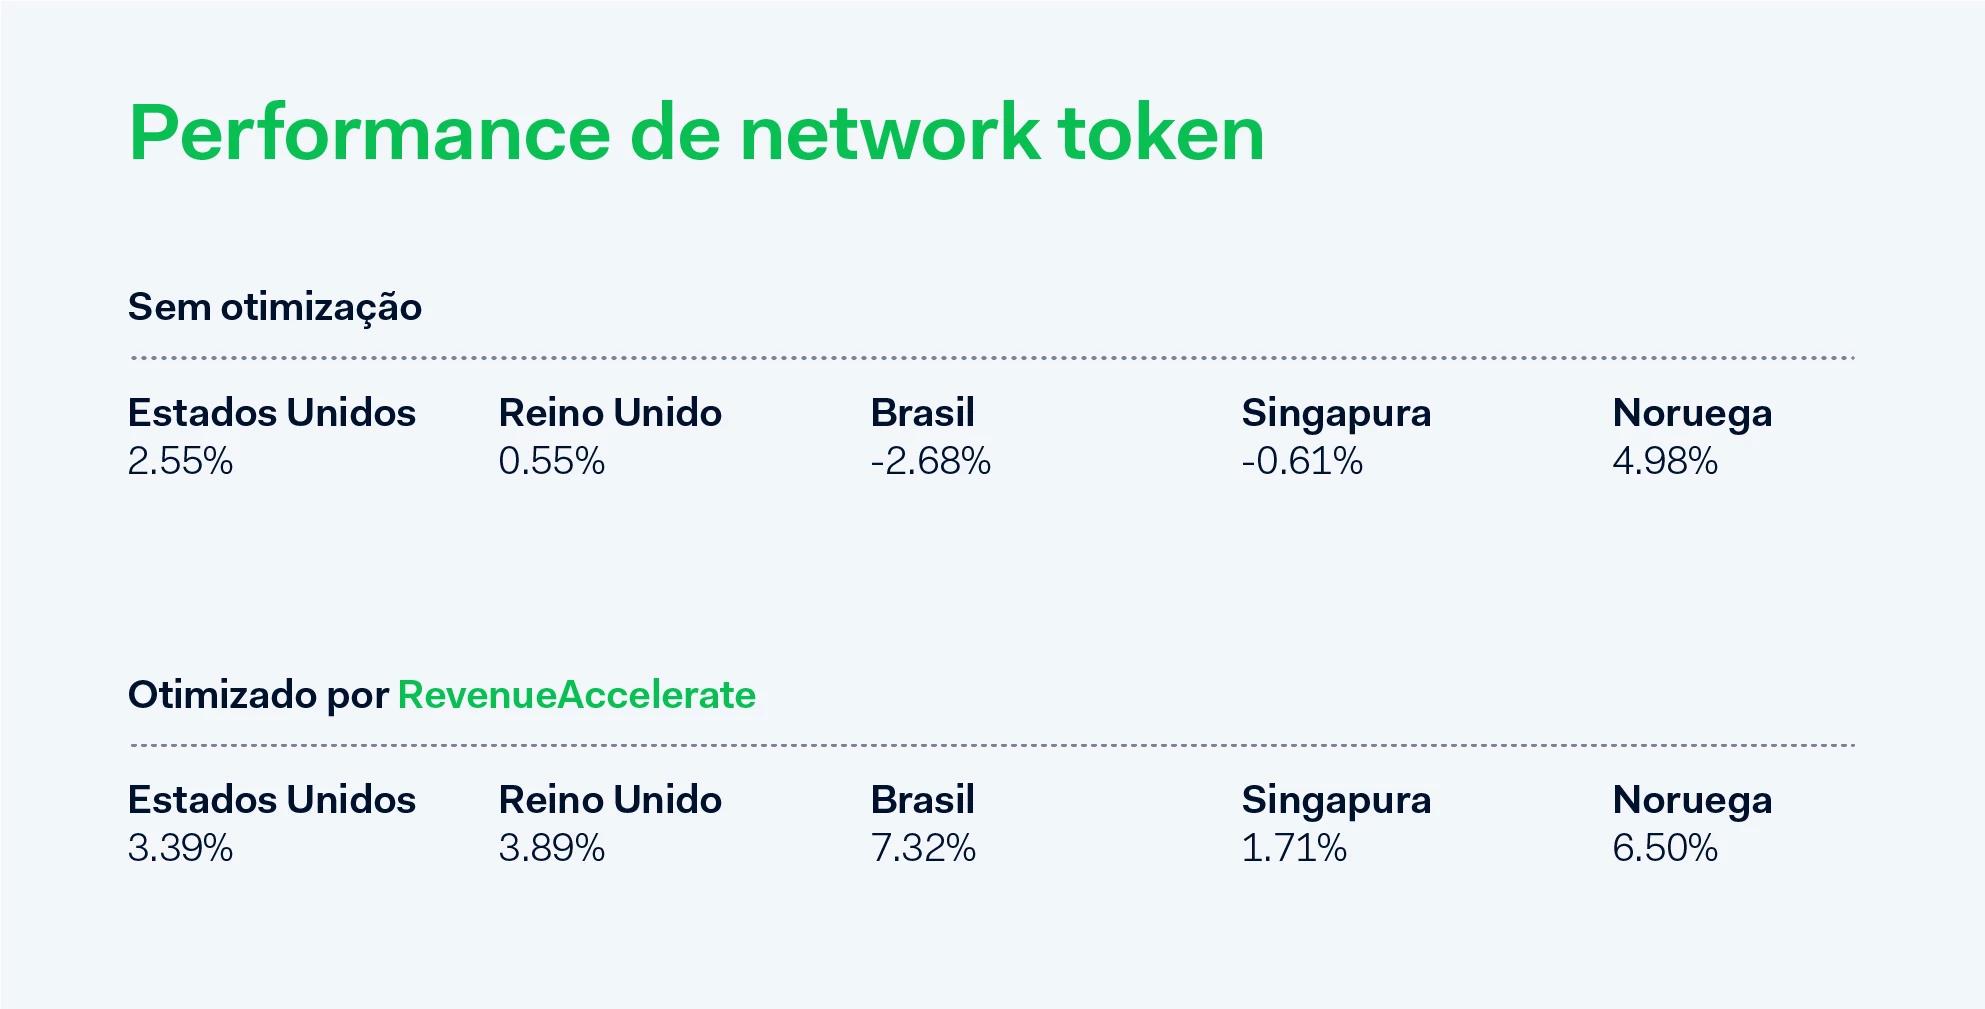 Performance de network token com RevenueAccelerate